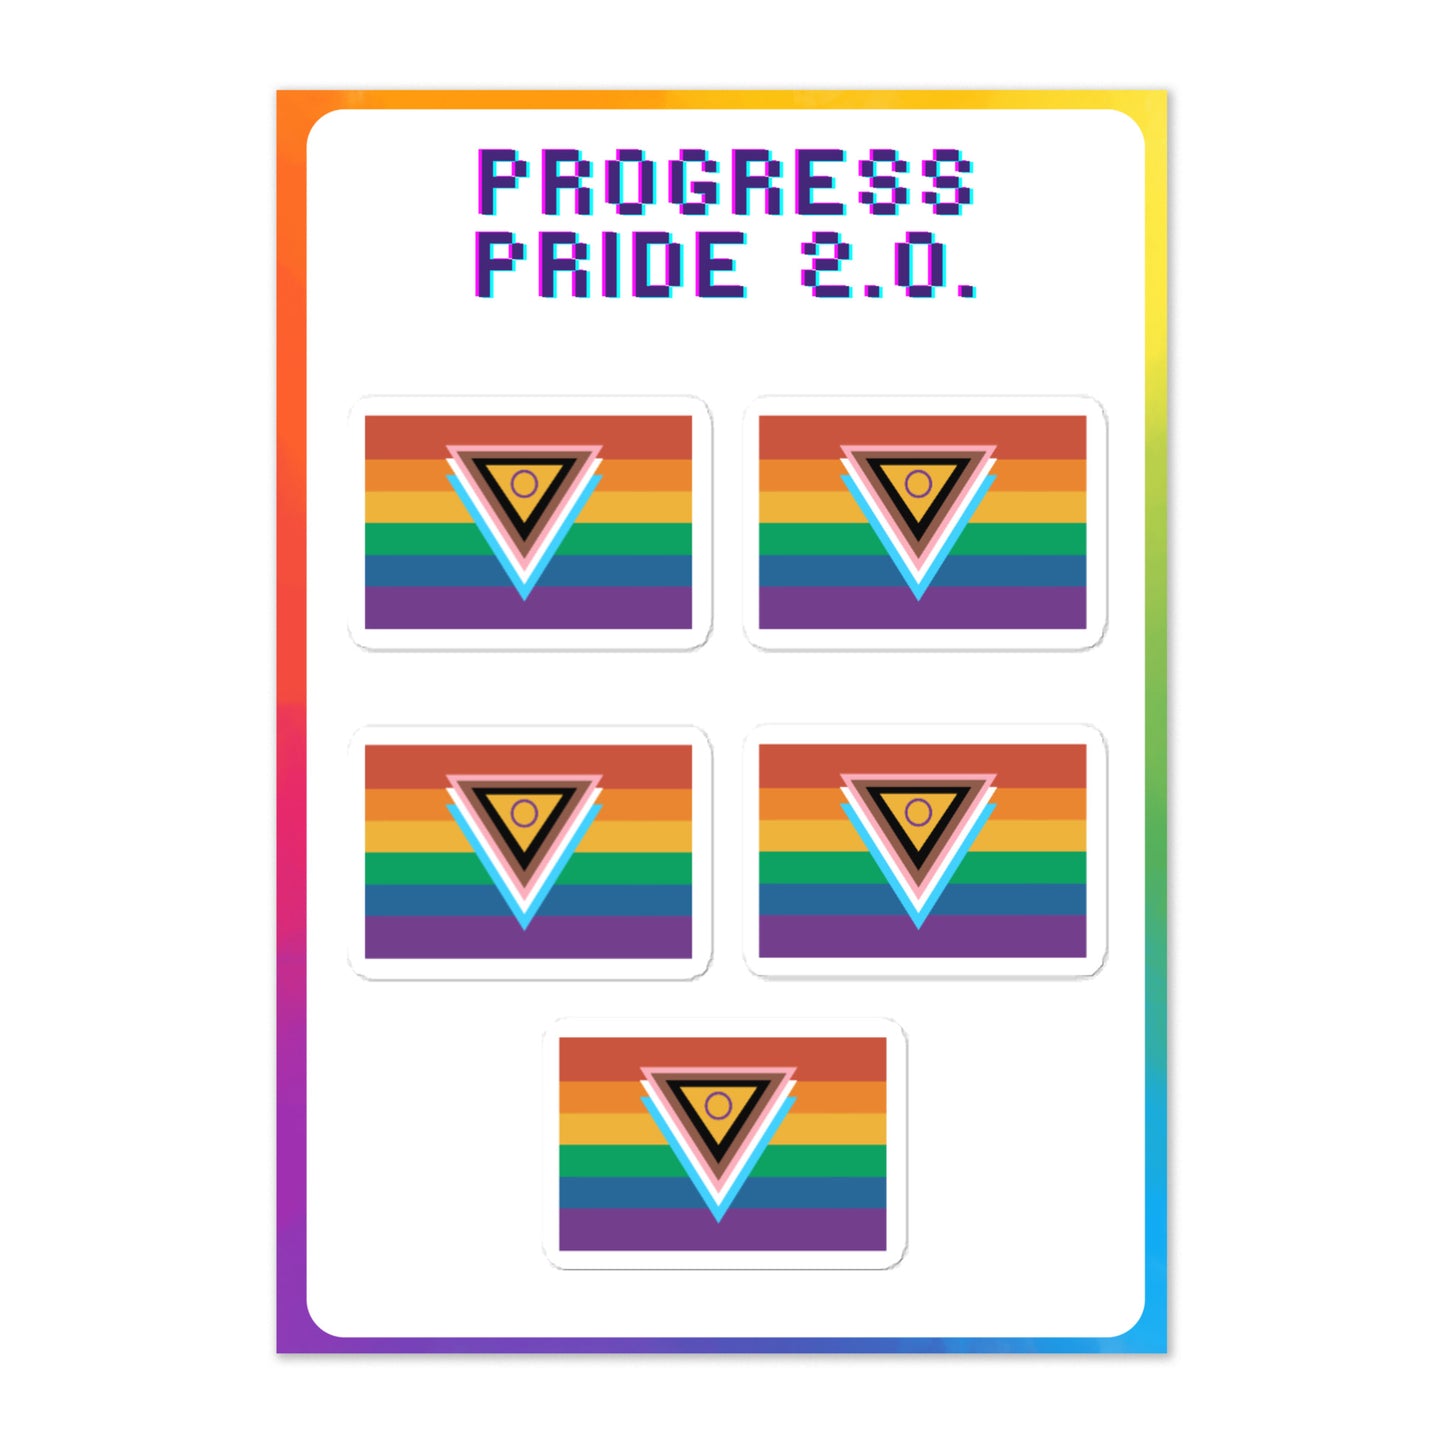 Progress Pride 2.0. Sticker sheet